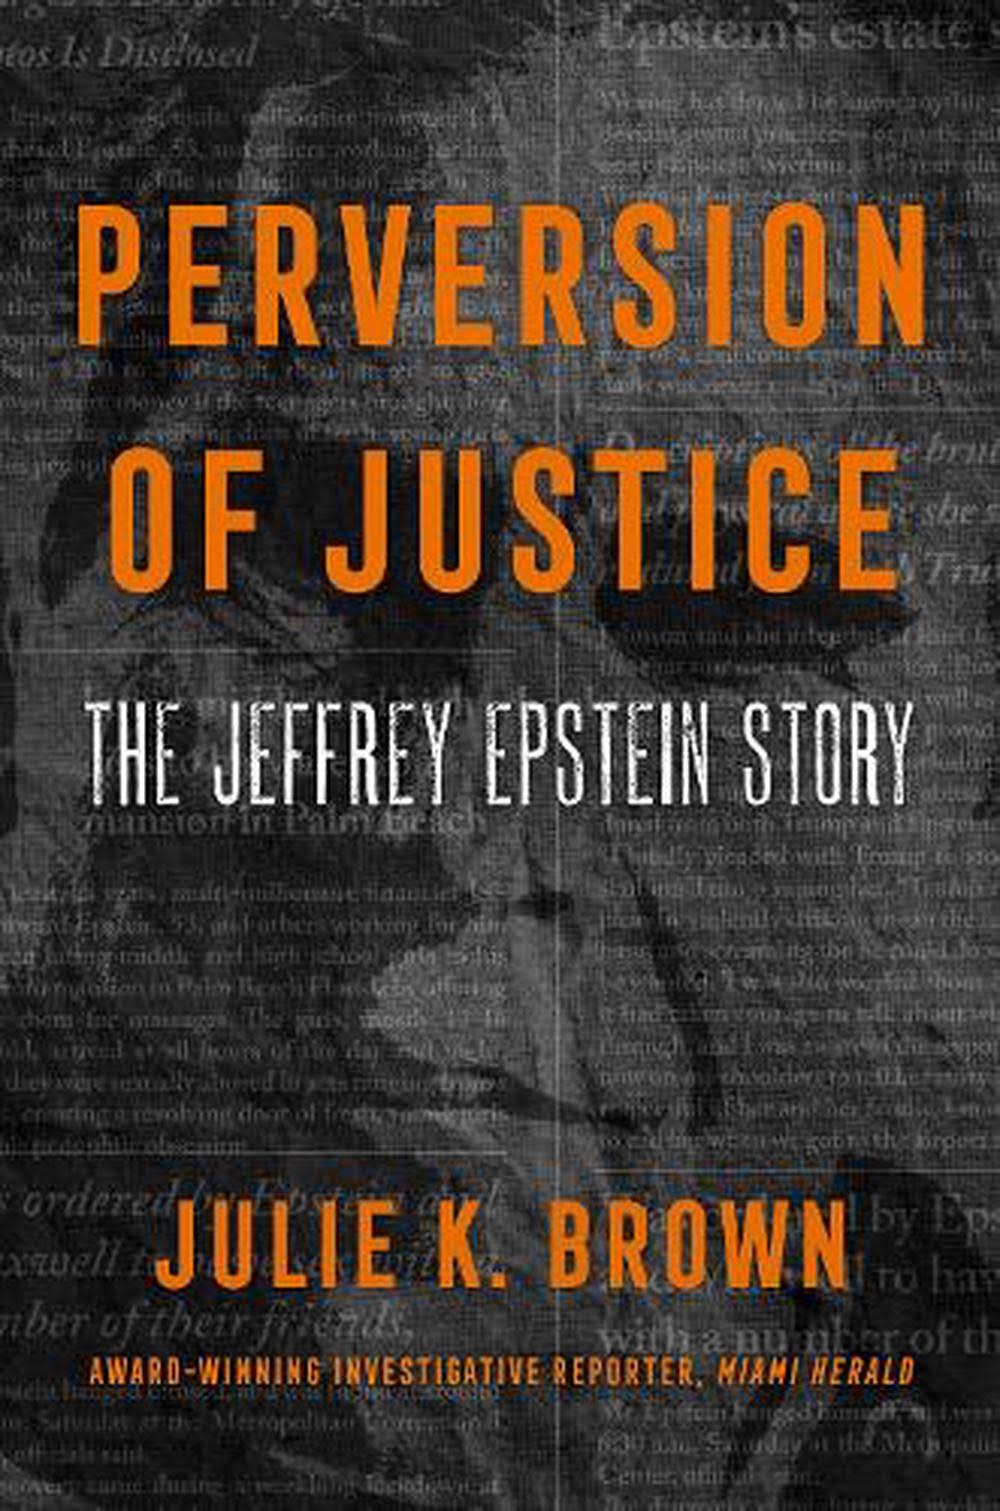 Perversion of Justice by Julie K. Brown